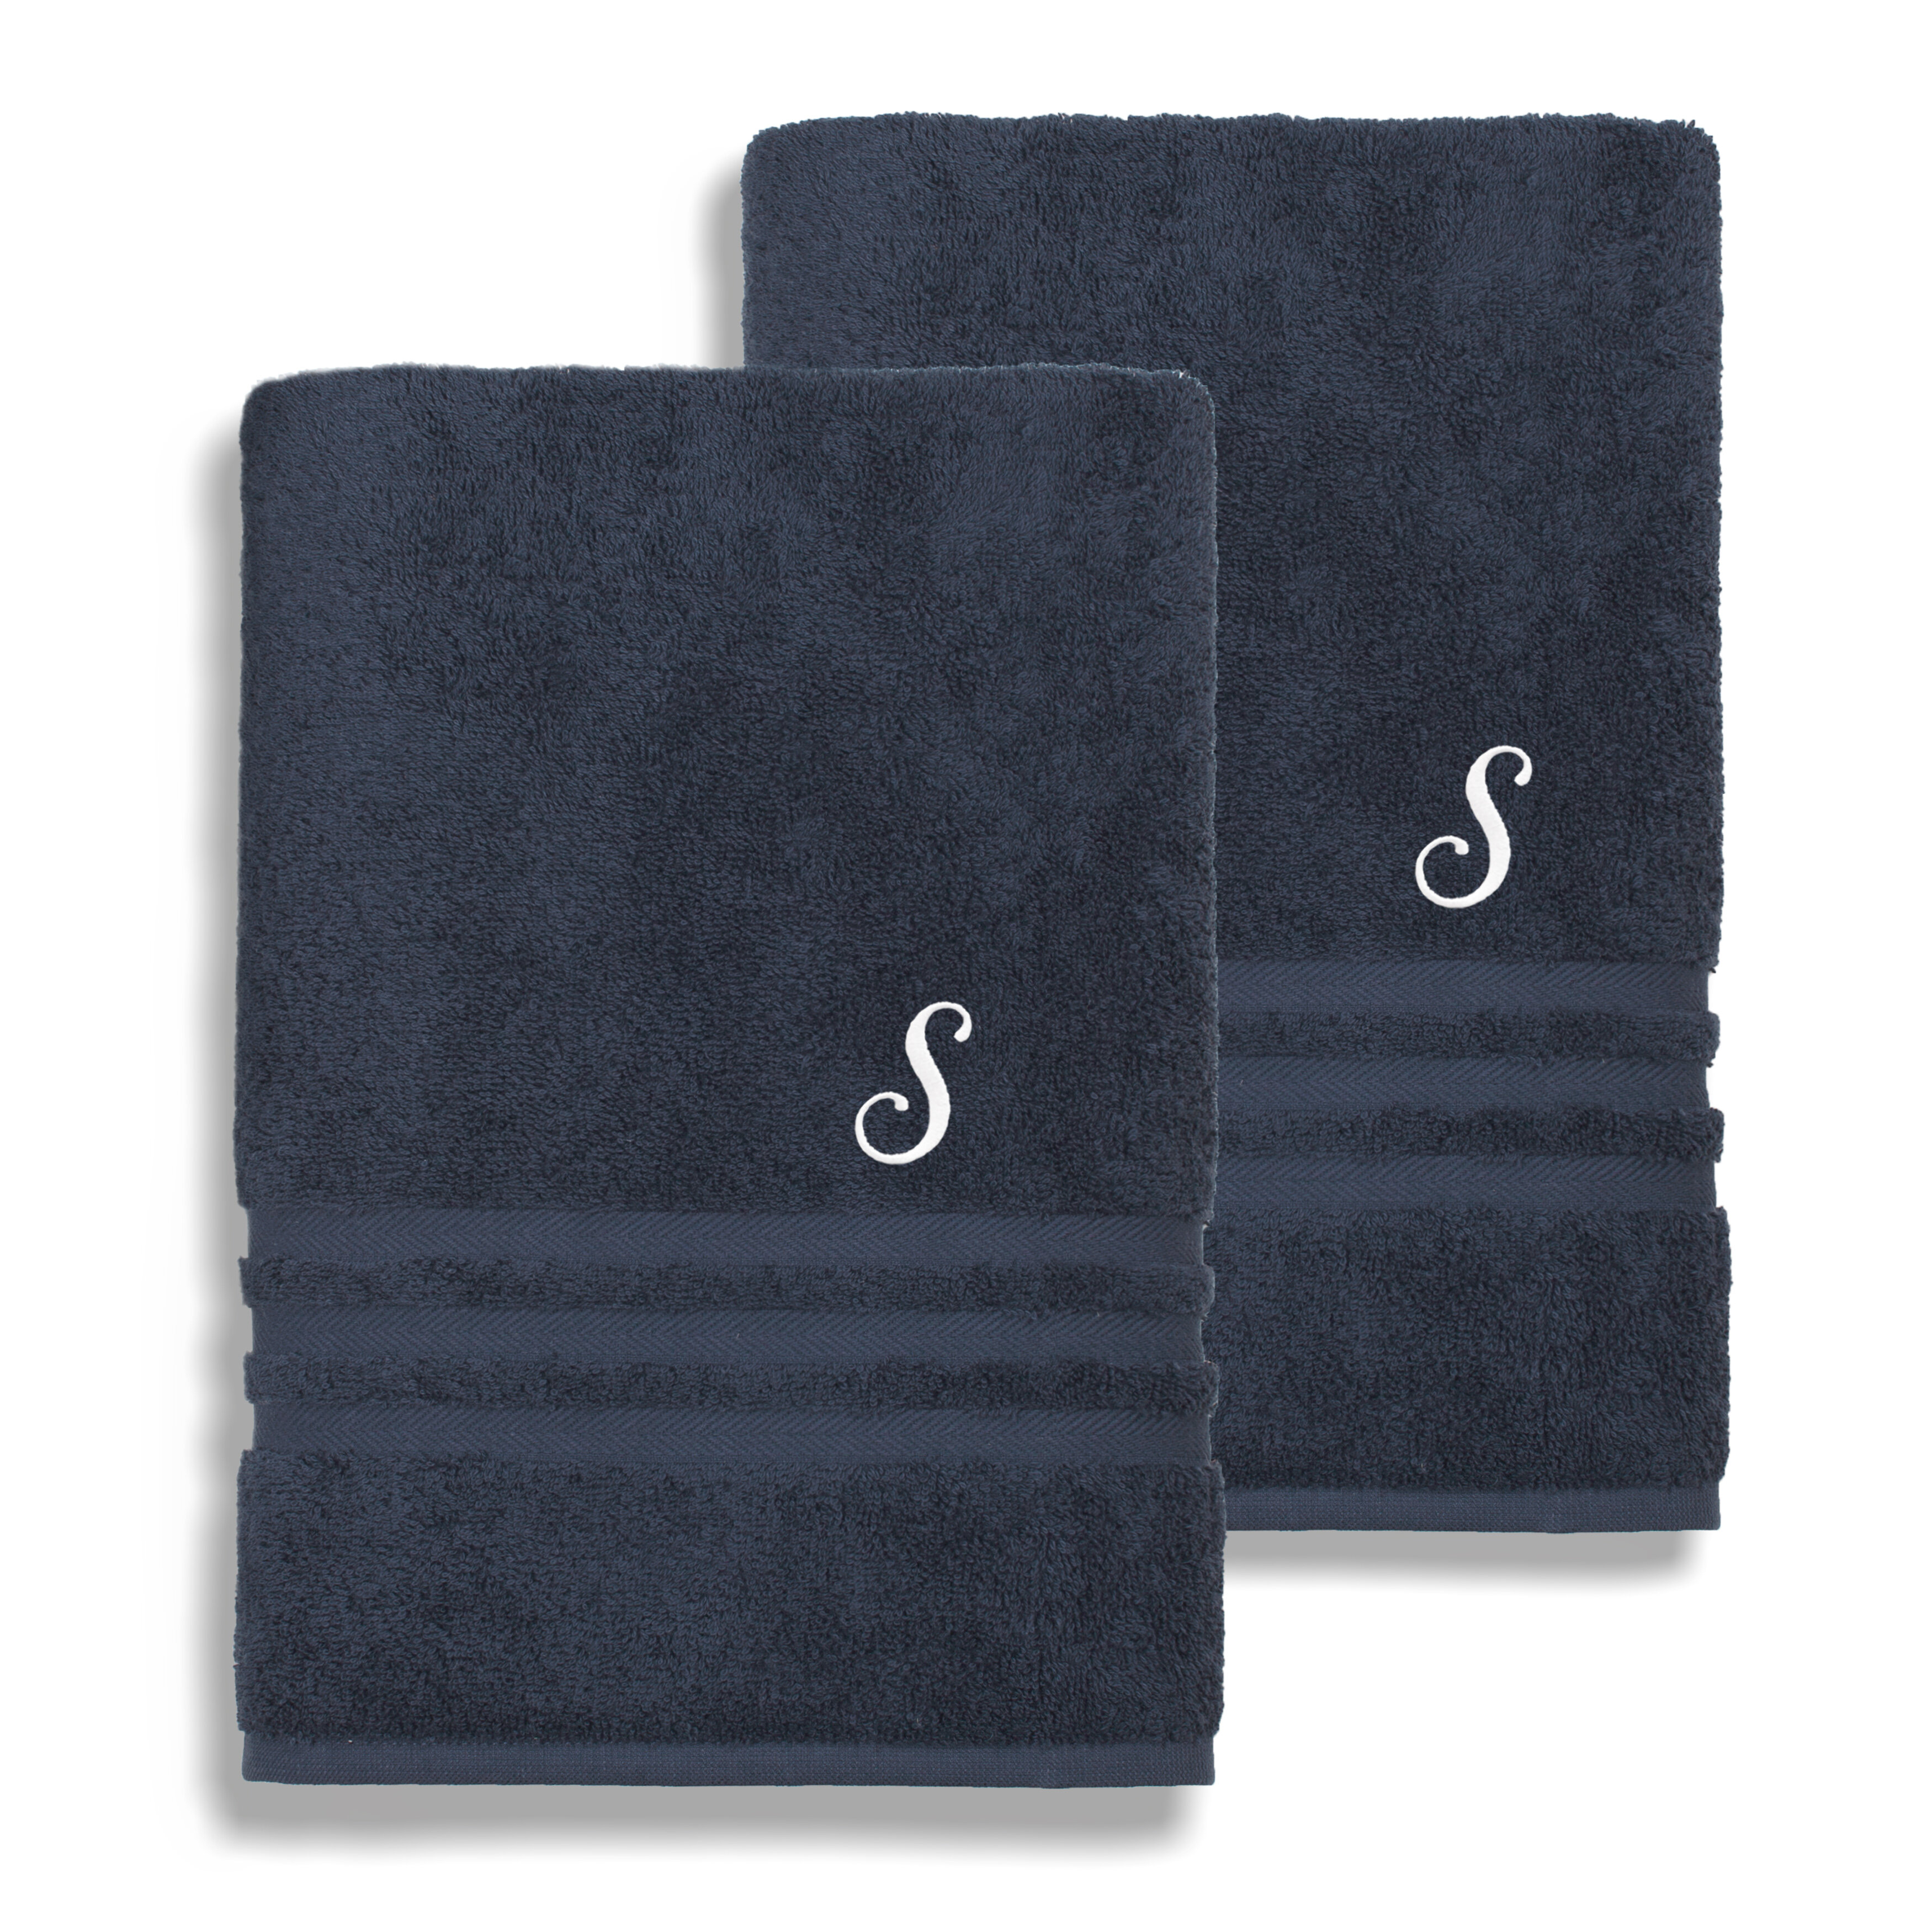 Home Sweet Home 6-Piece 650 GSM Cotton Bath Towel Set - On Sale